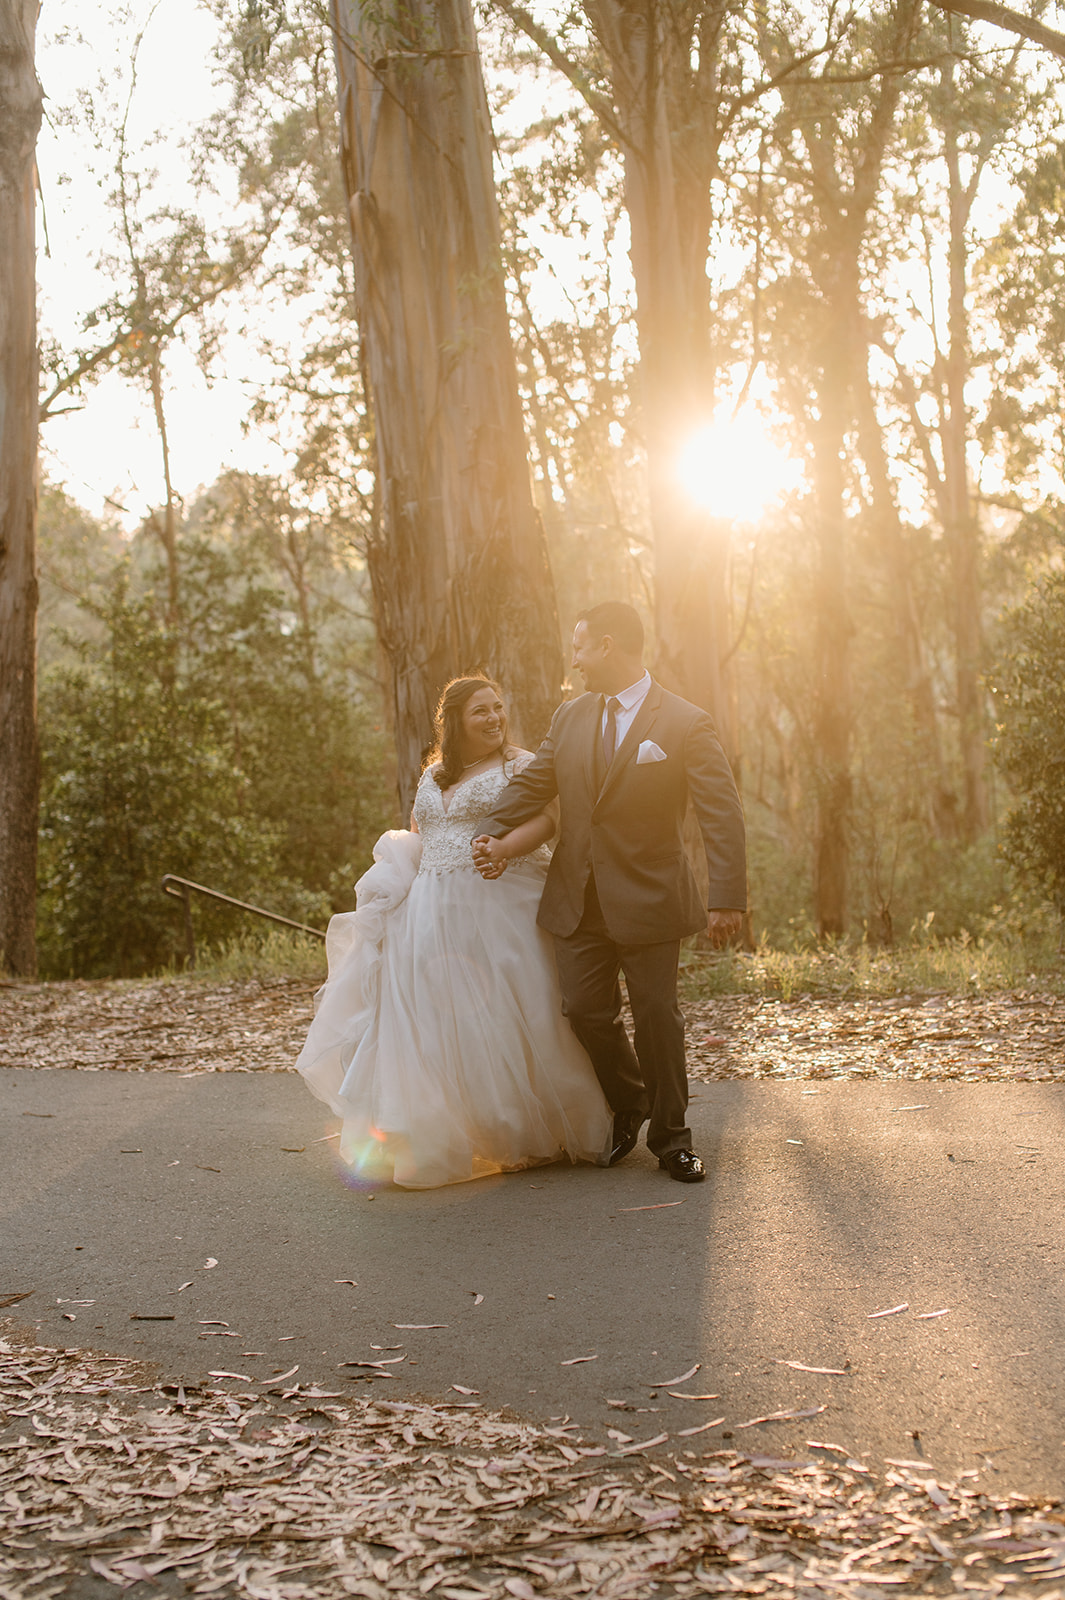 Sydney Jai Wedding Photographer - Bride and groom photos, Berkeley California wedding, golden hour wedding photos